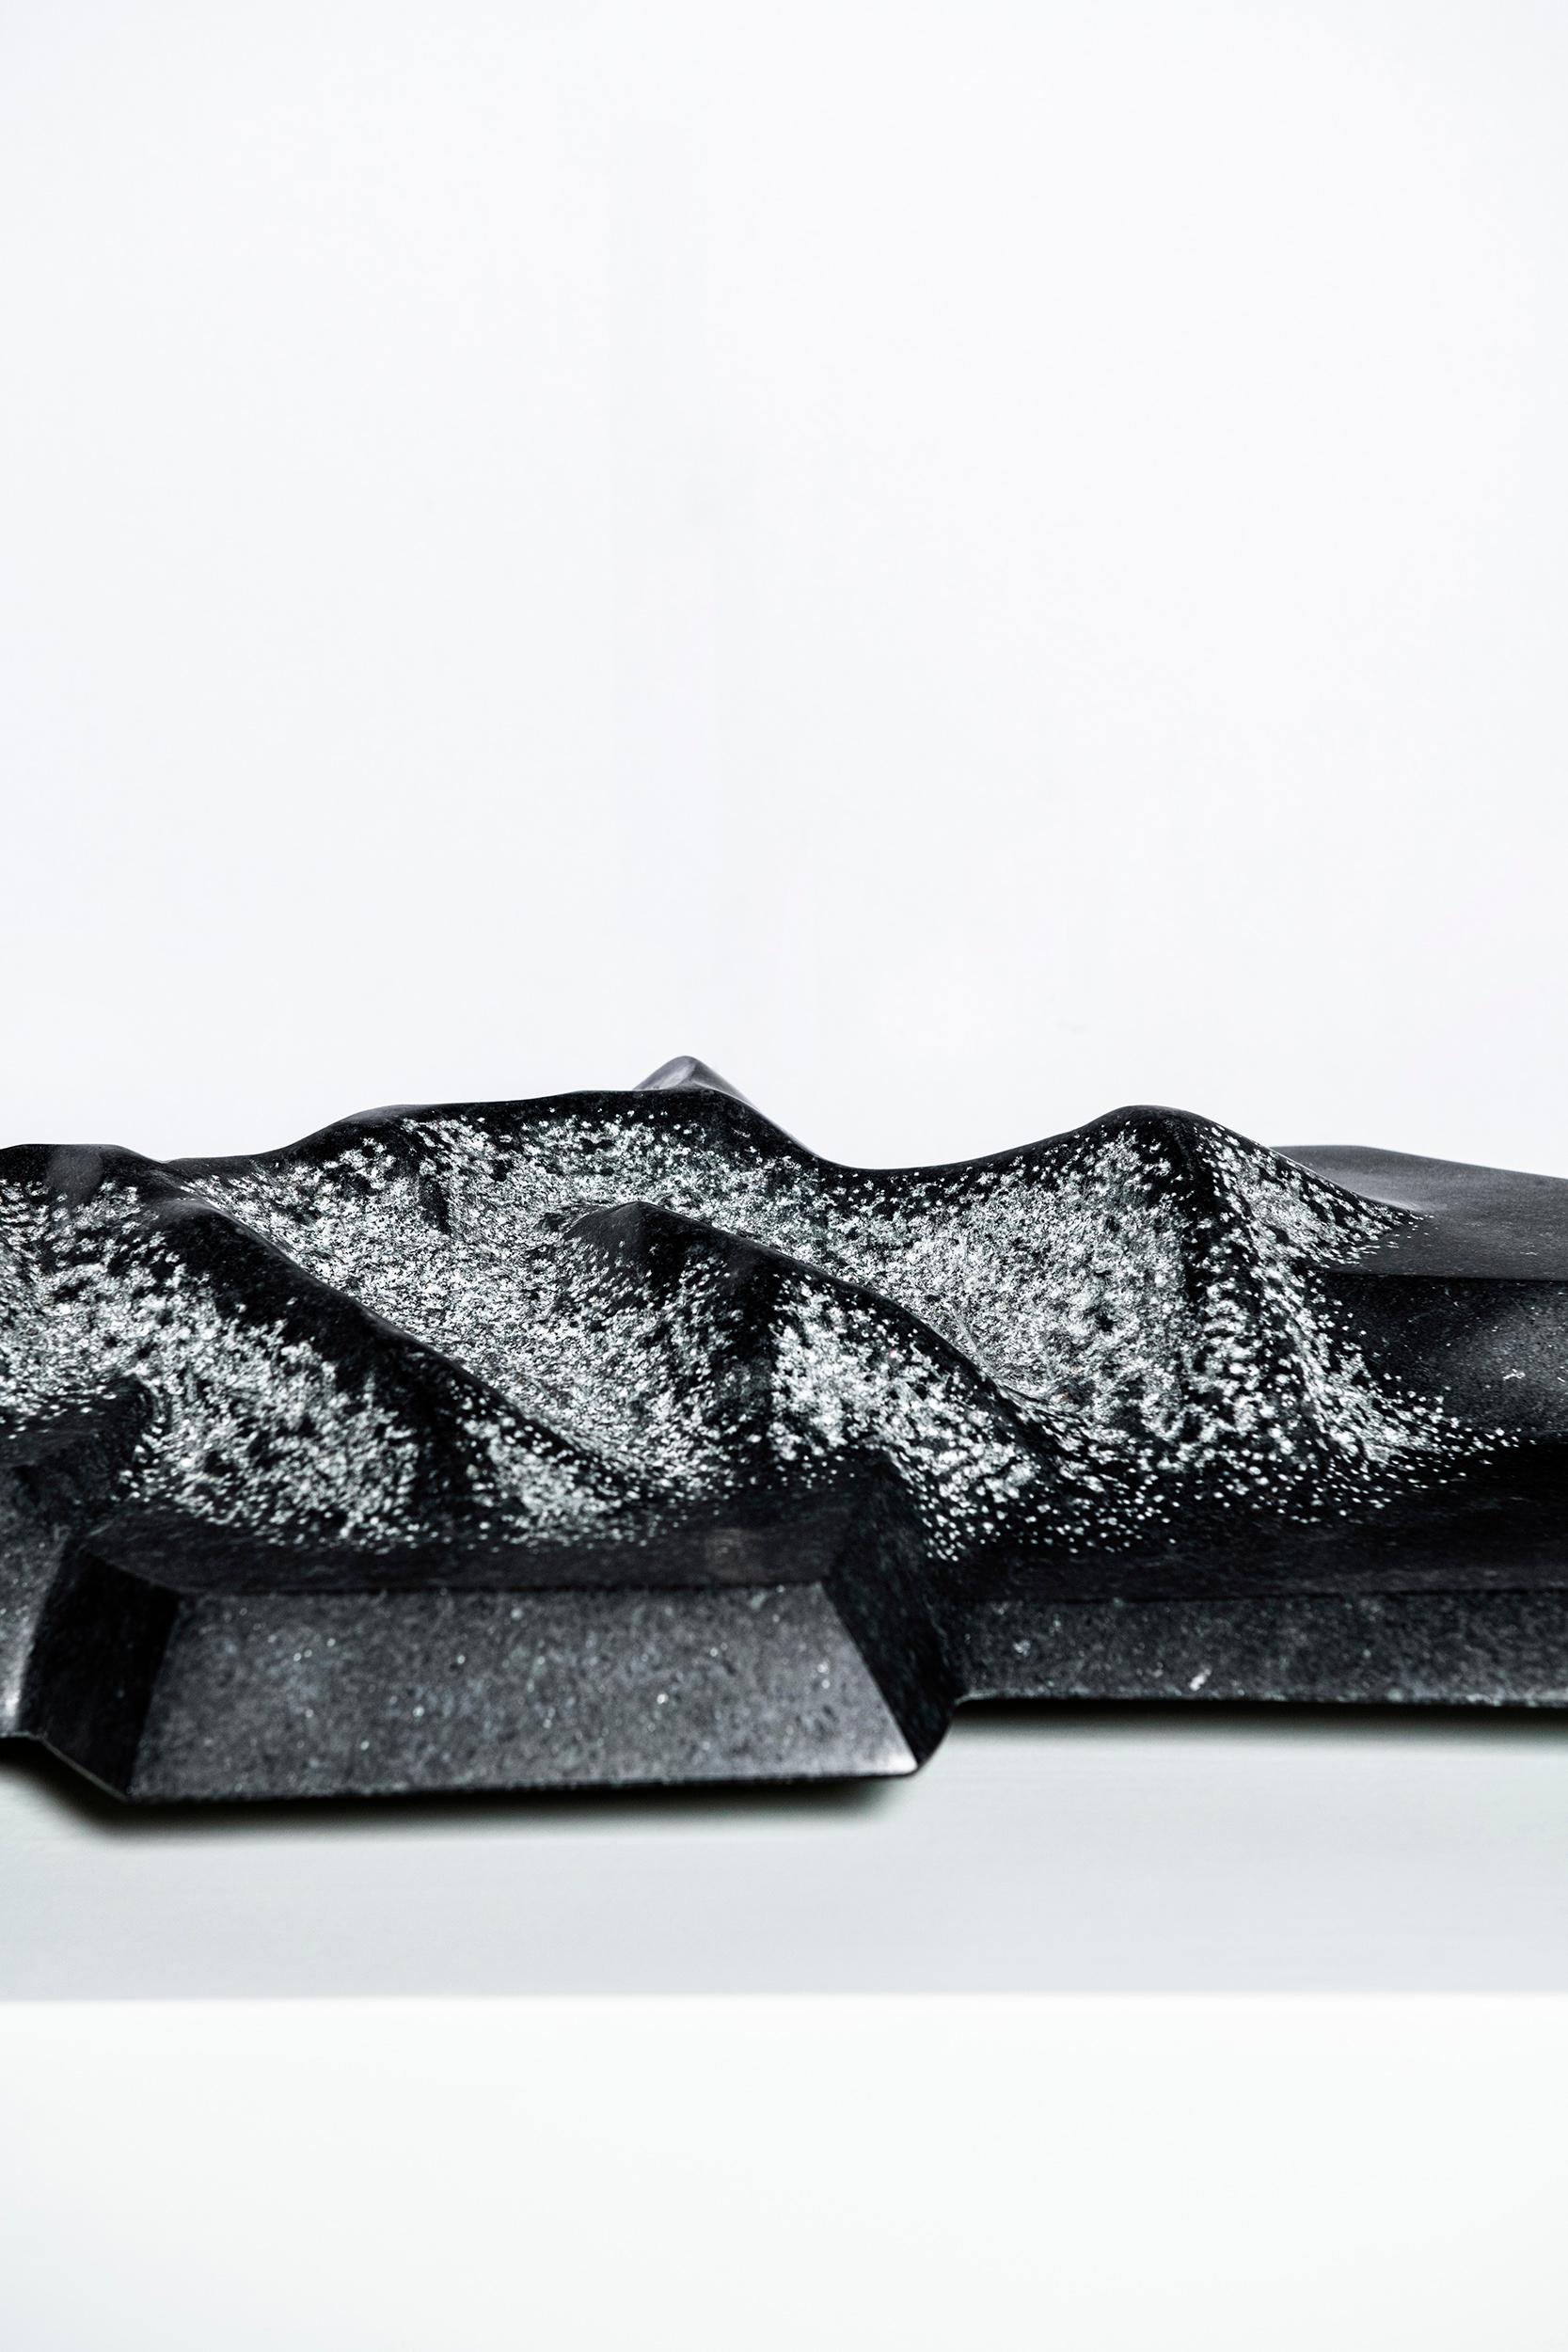 Moderne Sculpture en granit de Juan Pablo Marturano, Argentine, 2019 en vente